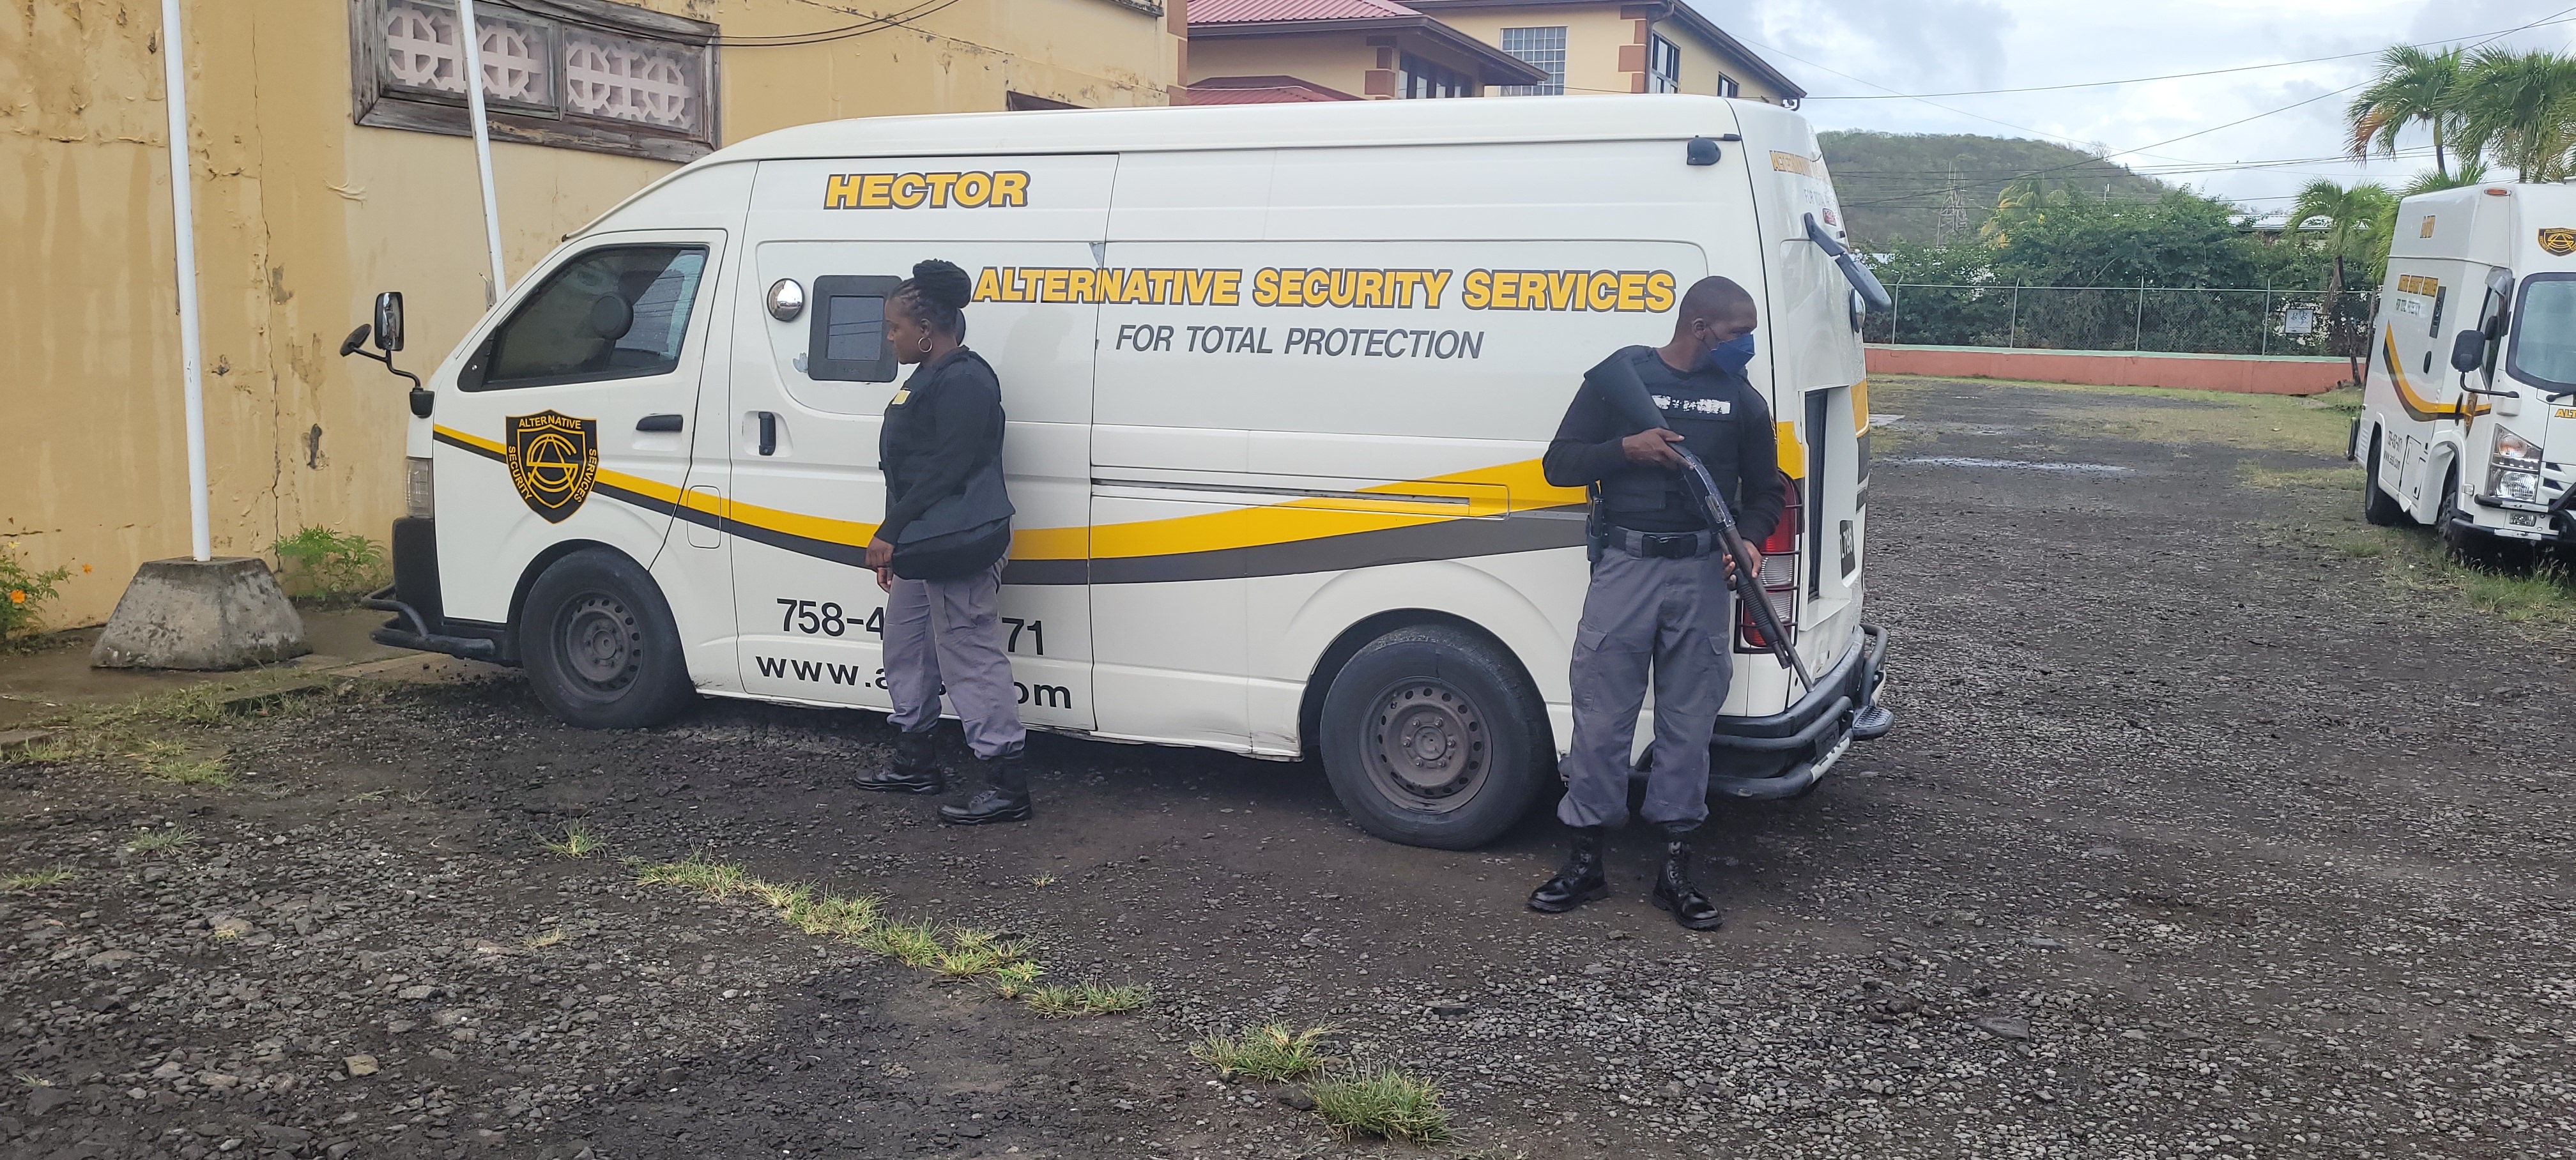 Alternative Security Services (St Lucia) Limited - Security Guard & Patrol Service